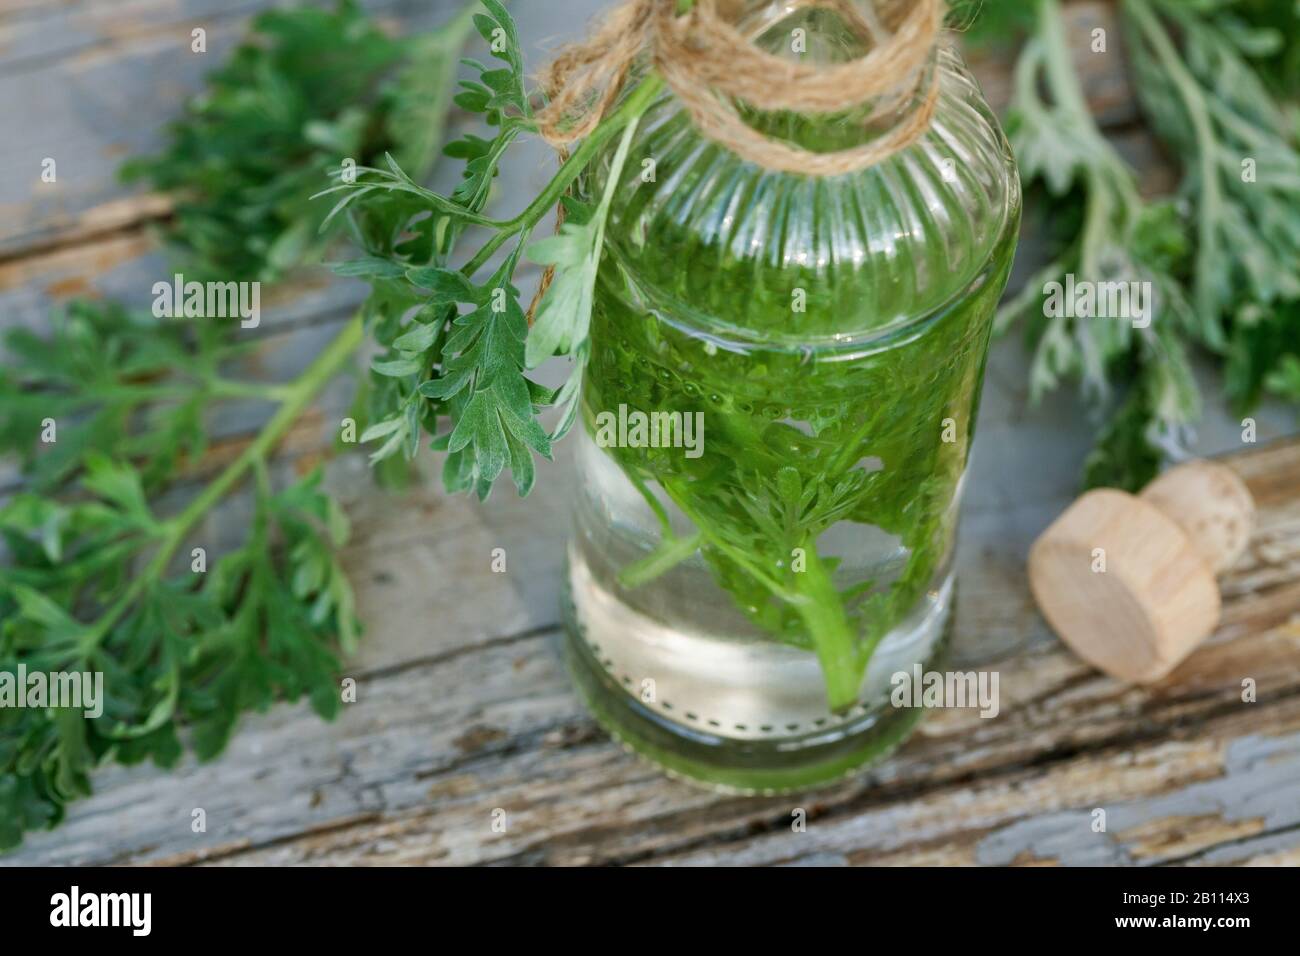 common wormwood, absinth wormwood, absinth sagewort (Artemisia absinthium), schnaps made from wormwood, Germany Stock Photo